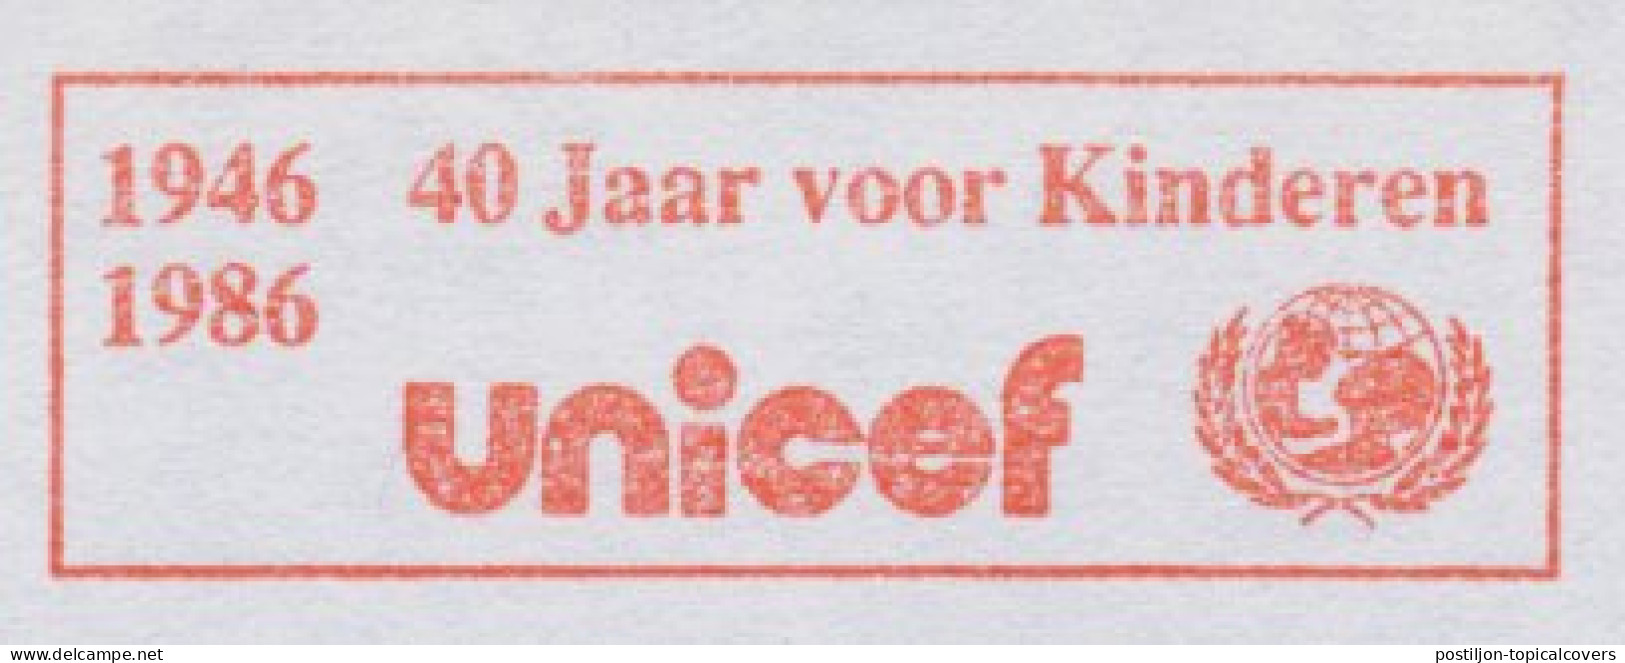 Meter Cut Netherlands 1986 UNICEF - 40 Years For Children - UNO